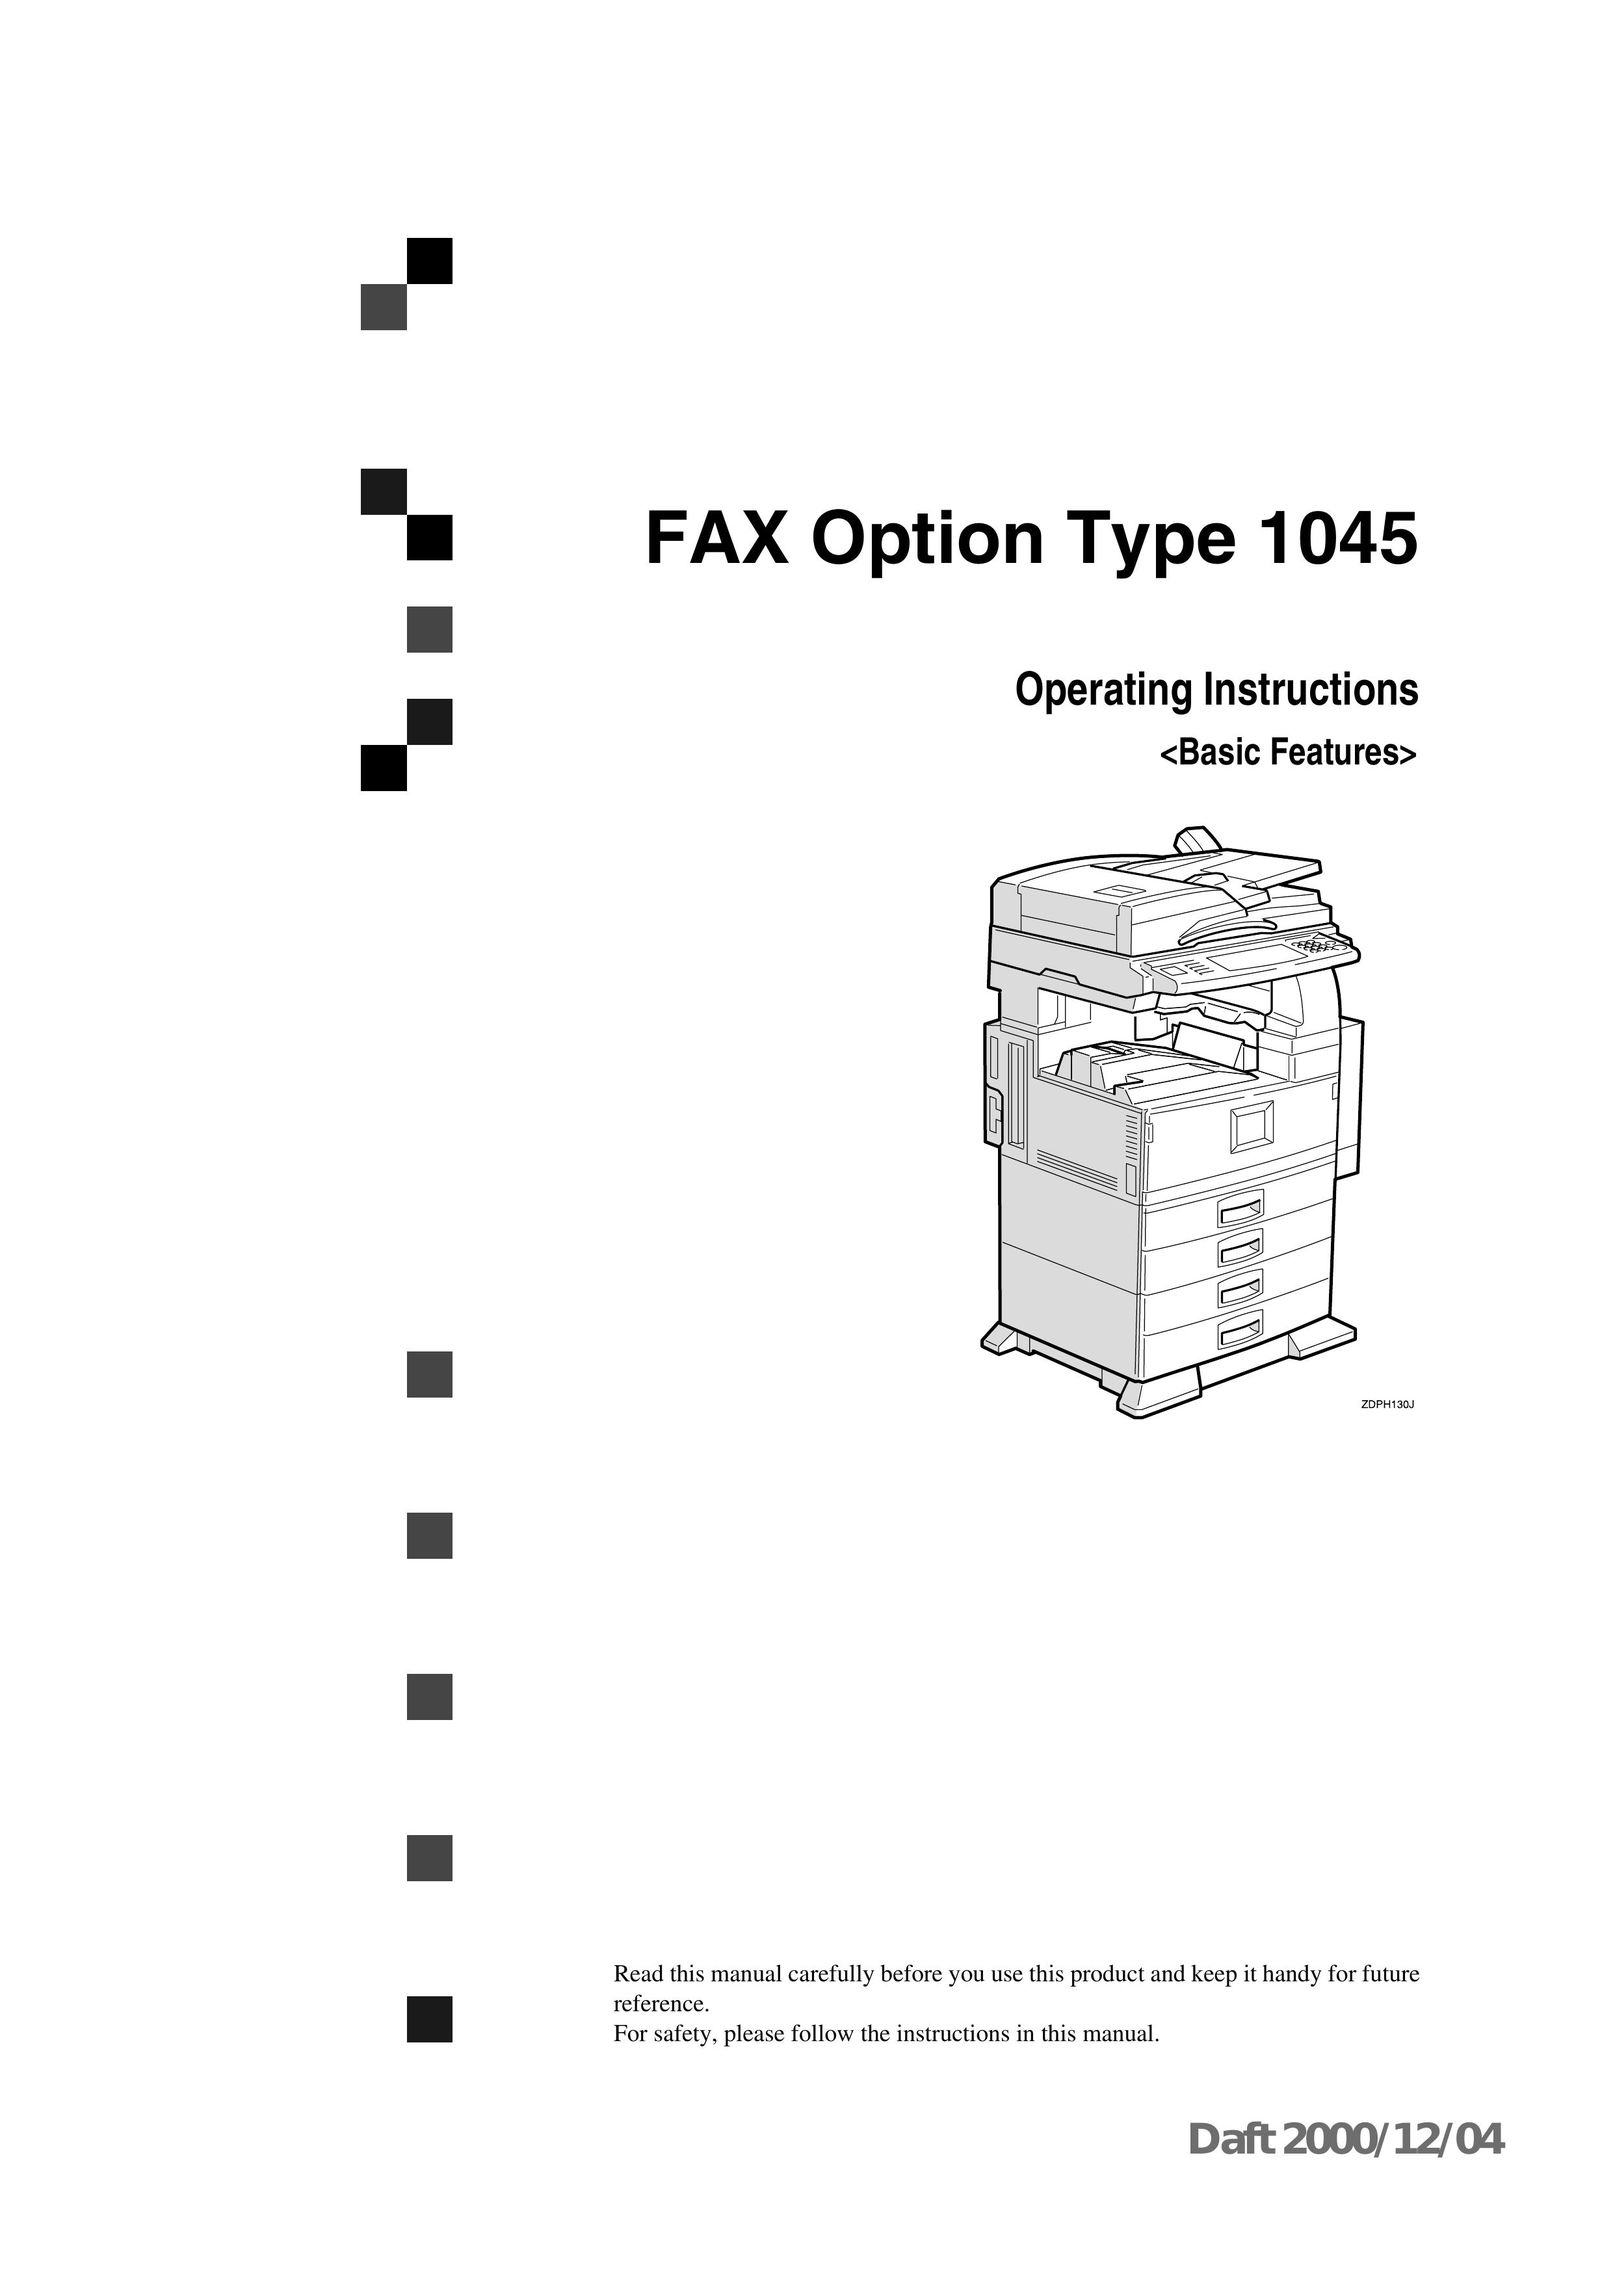 LG Electronics 1045 Fax Machine User Manual